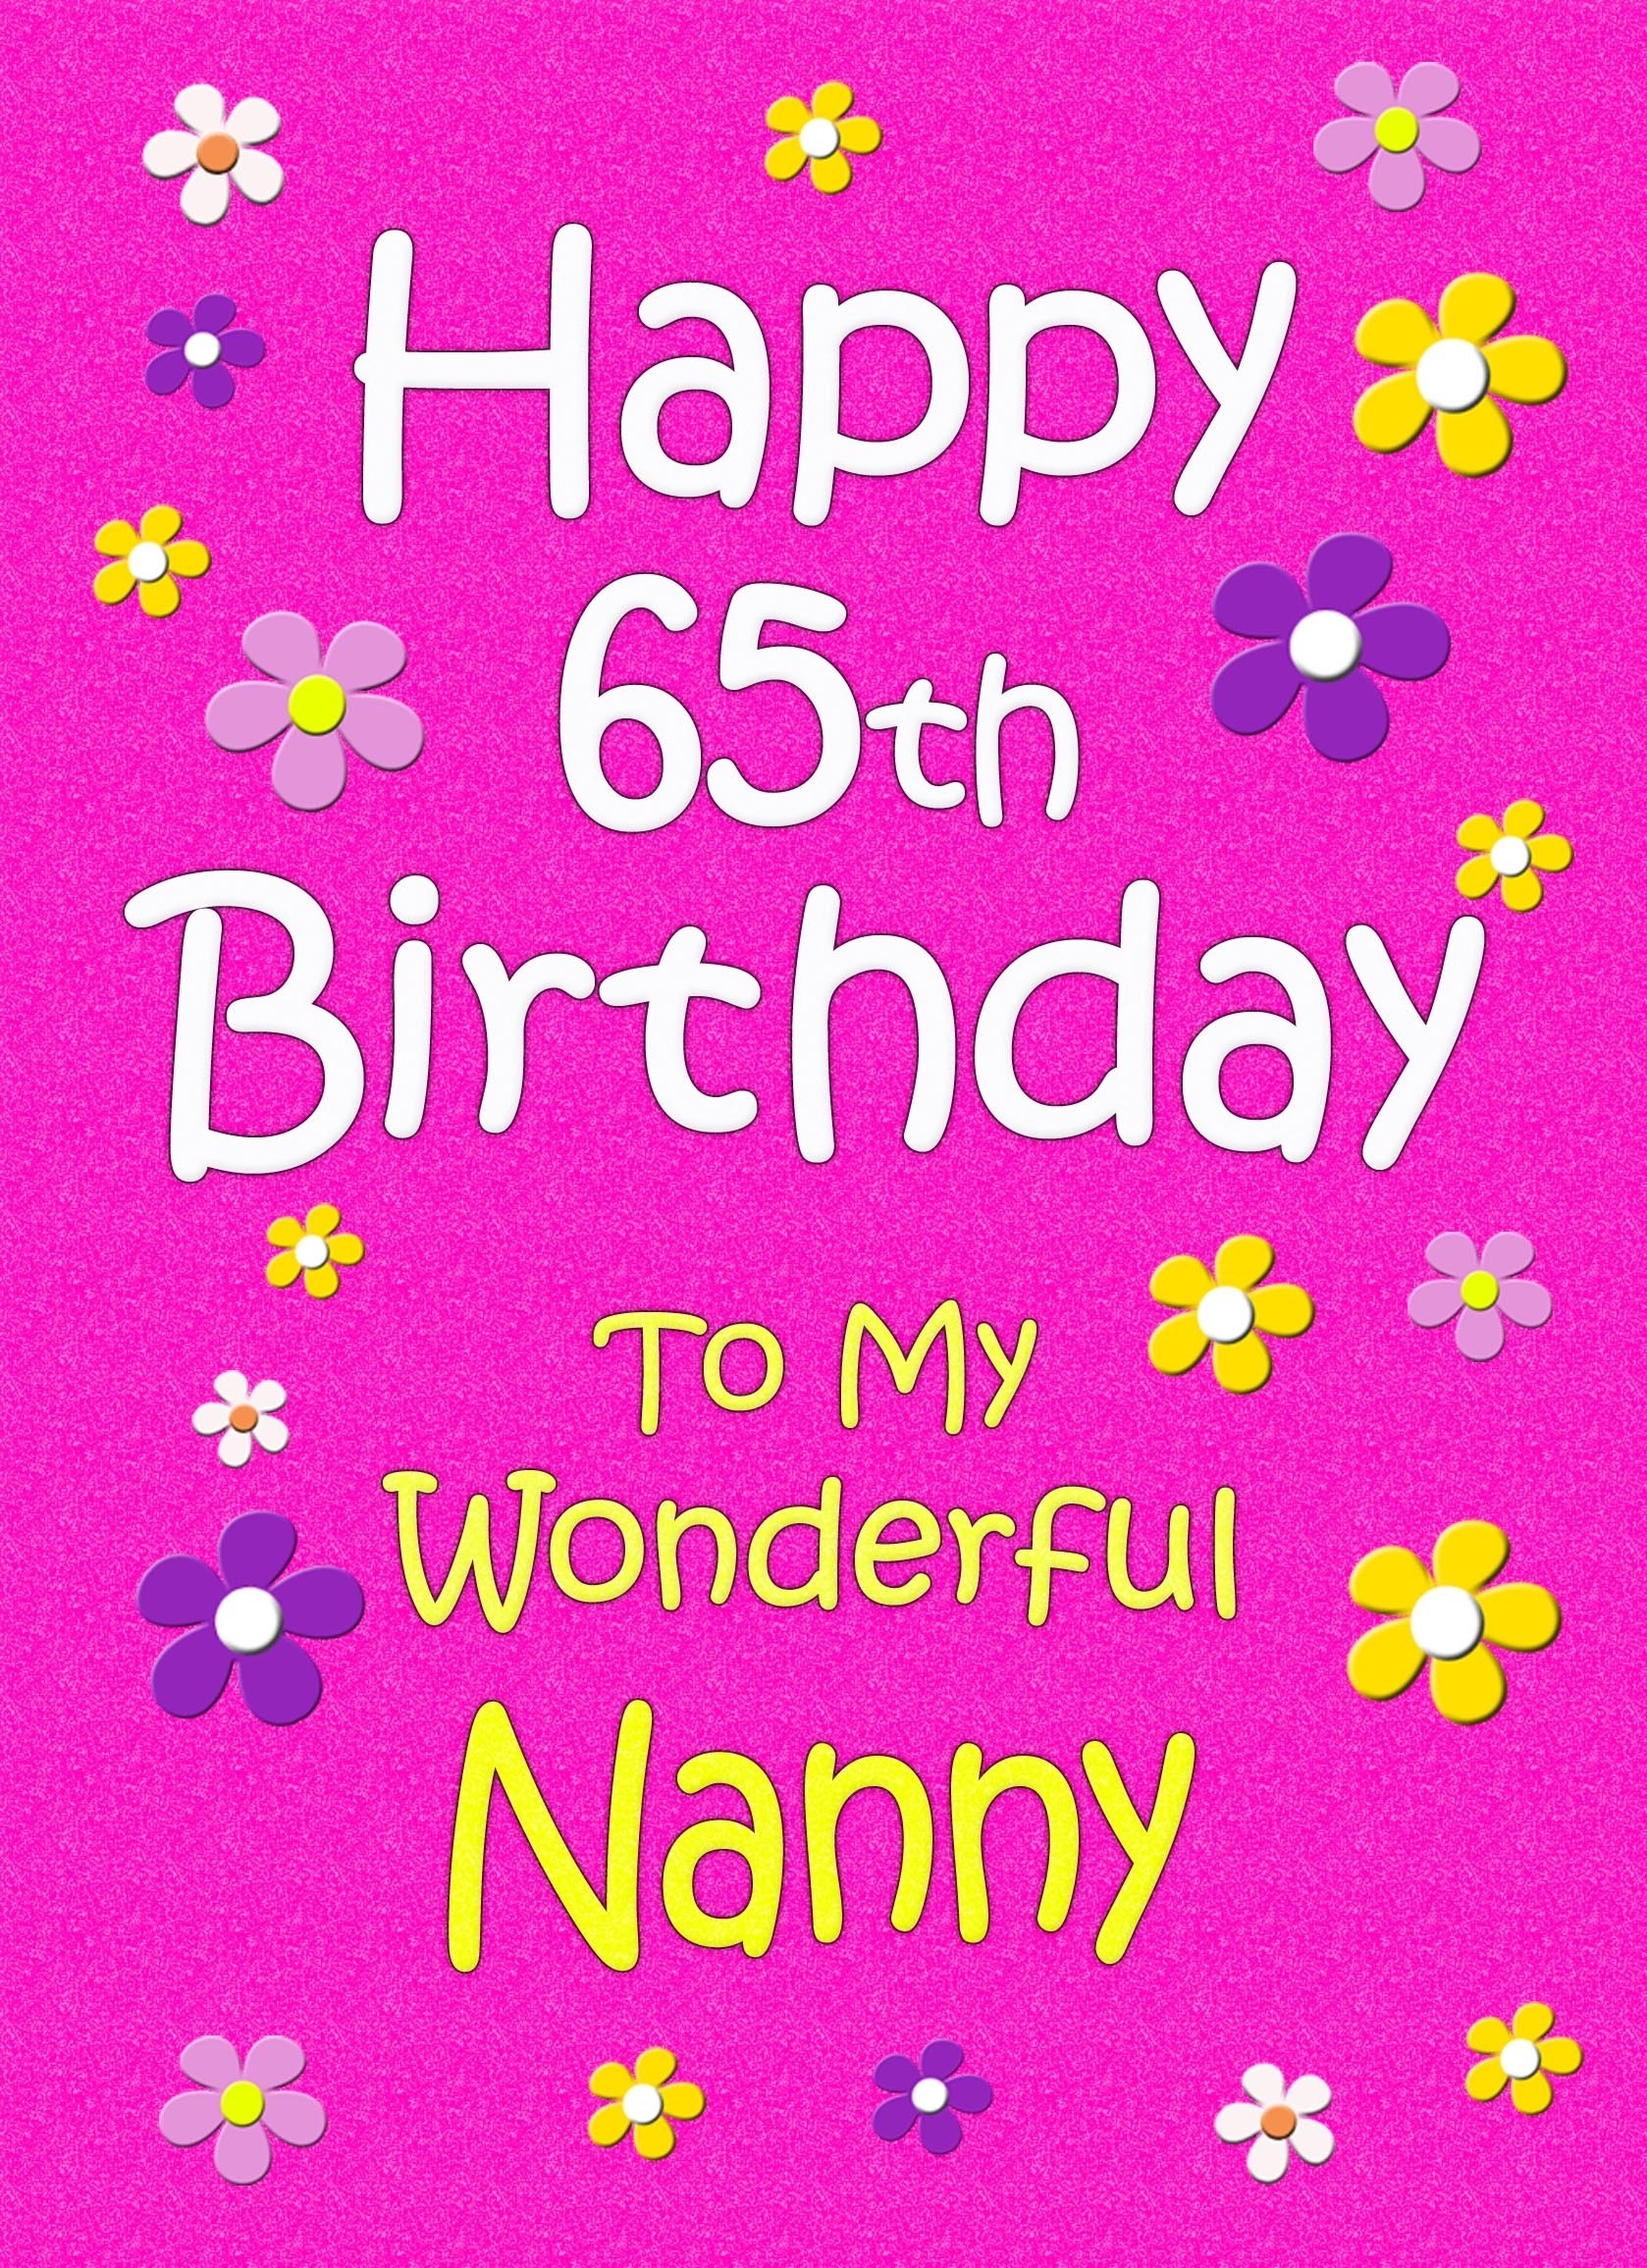 Nanny 65th Birthday Card (Pink)